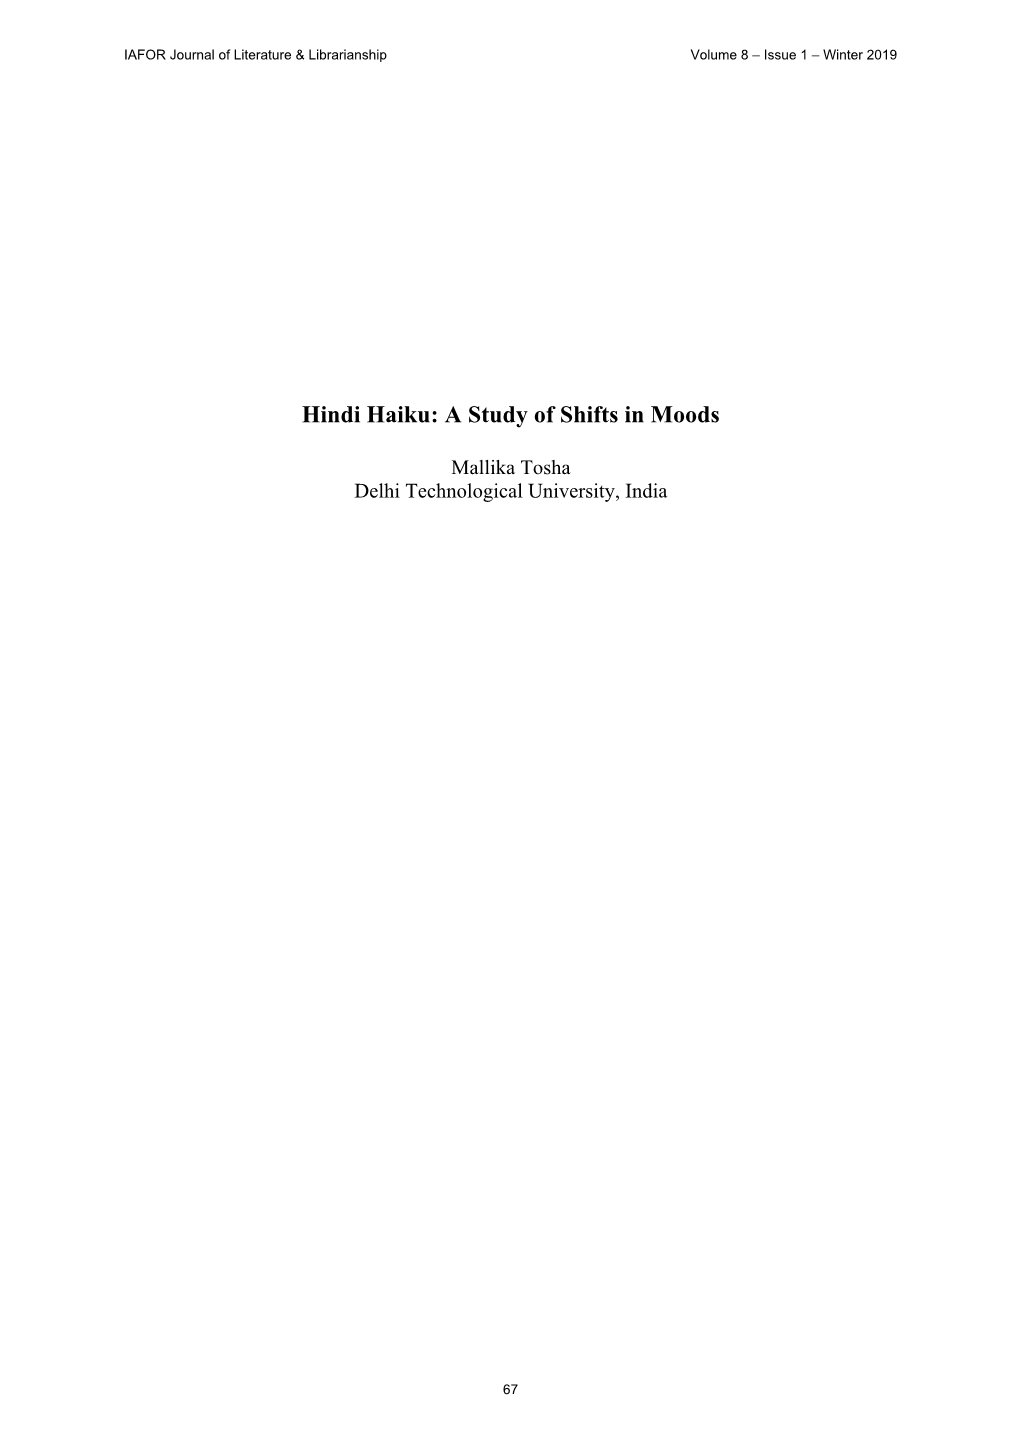 Hindi Haiku: a Study of Shifts in Moods